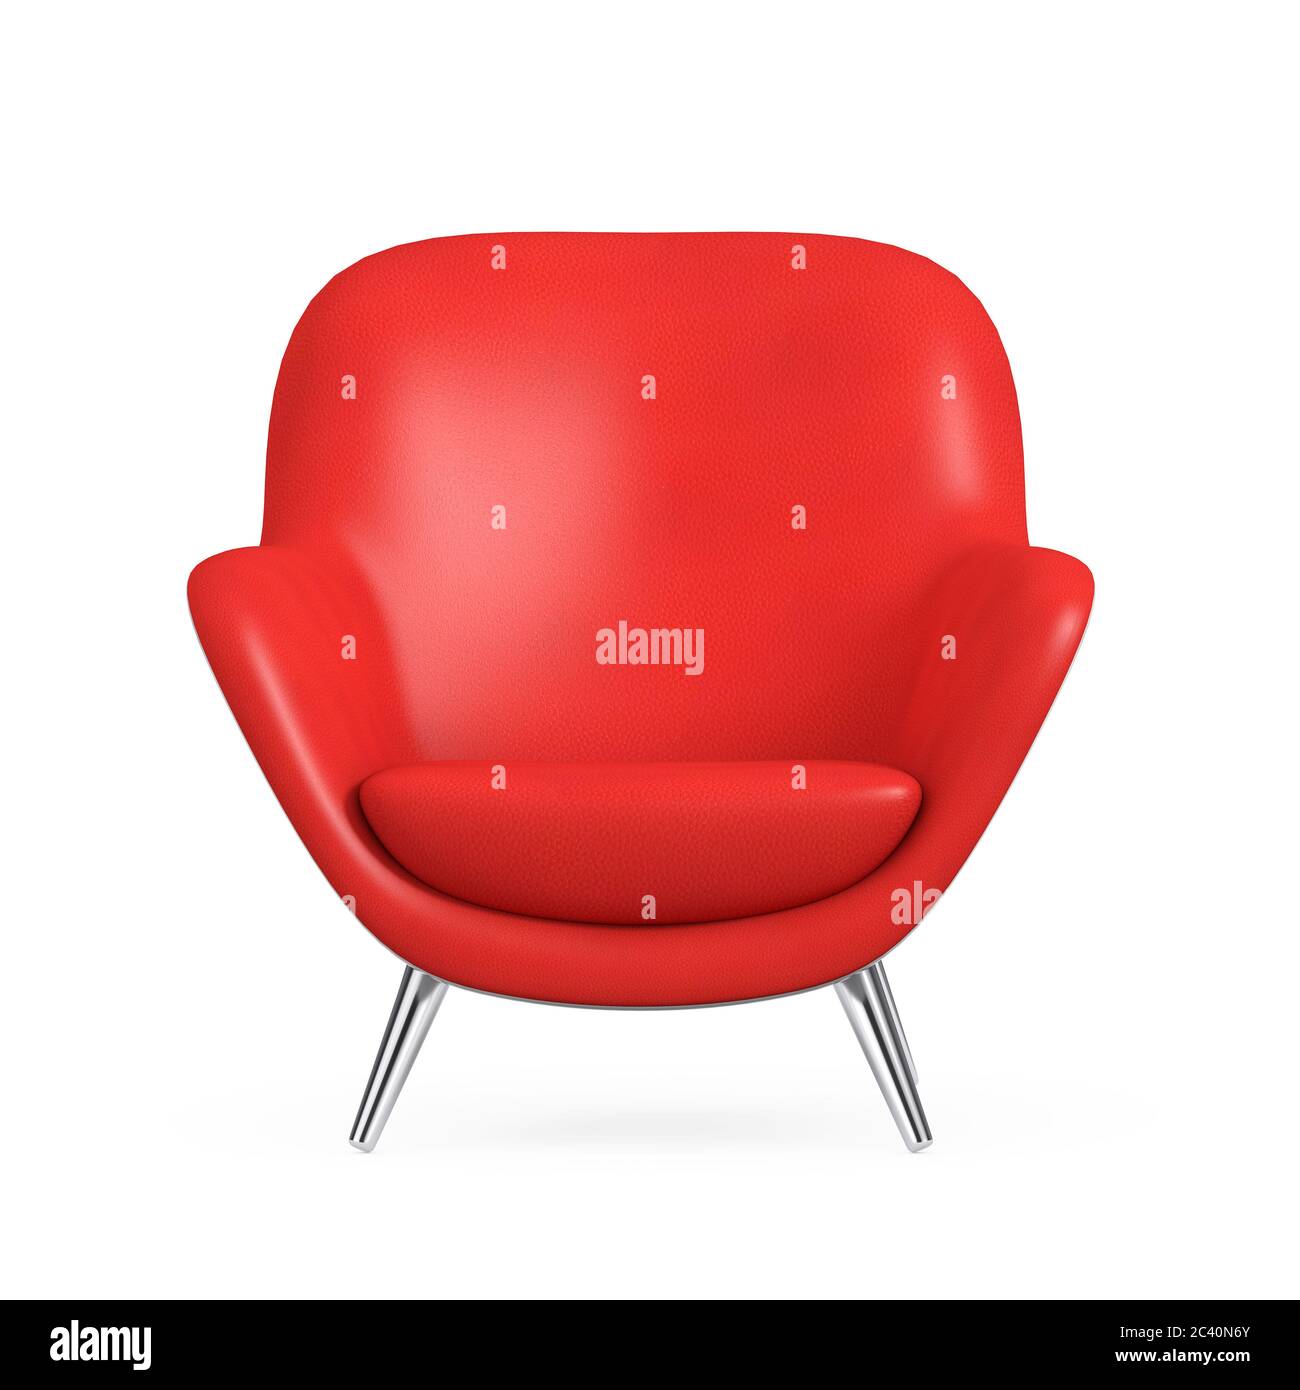 Sedia relax in pelle rossa moderna a forma ovale su sfondo bianco. Rendering 3d Foto Stock